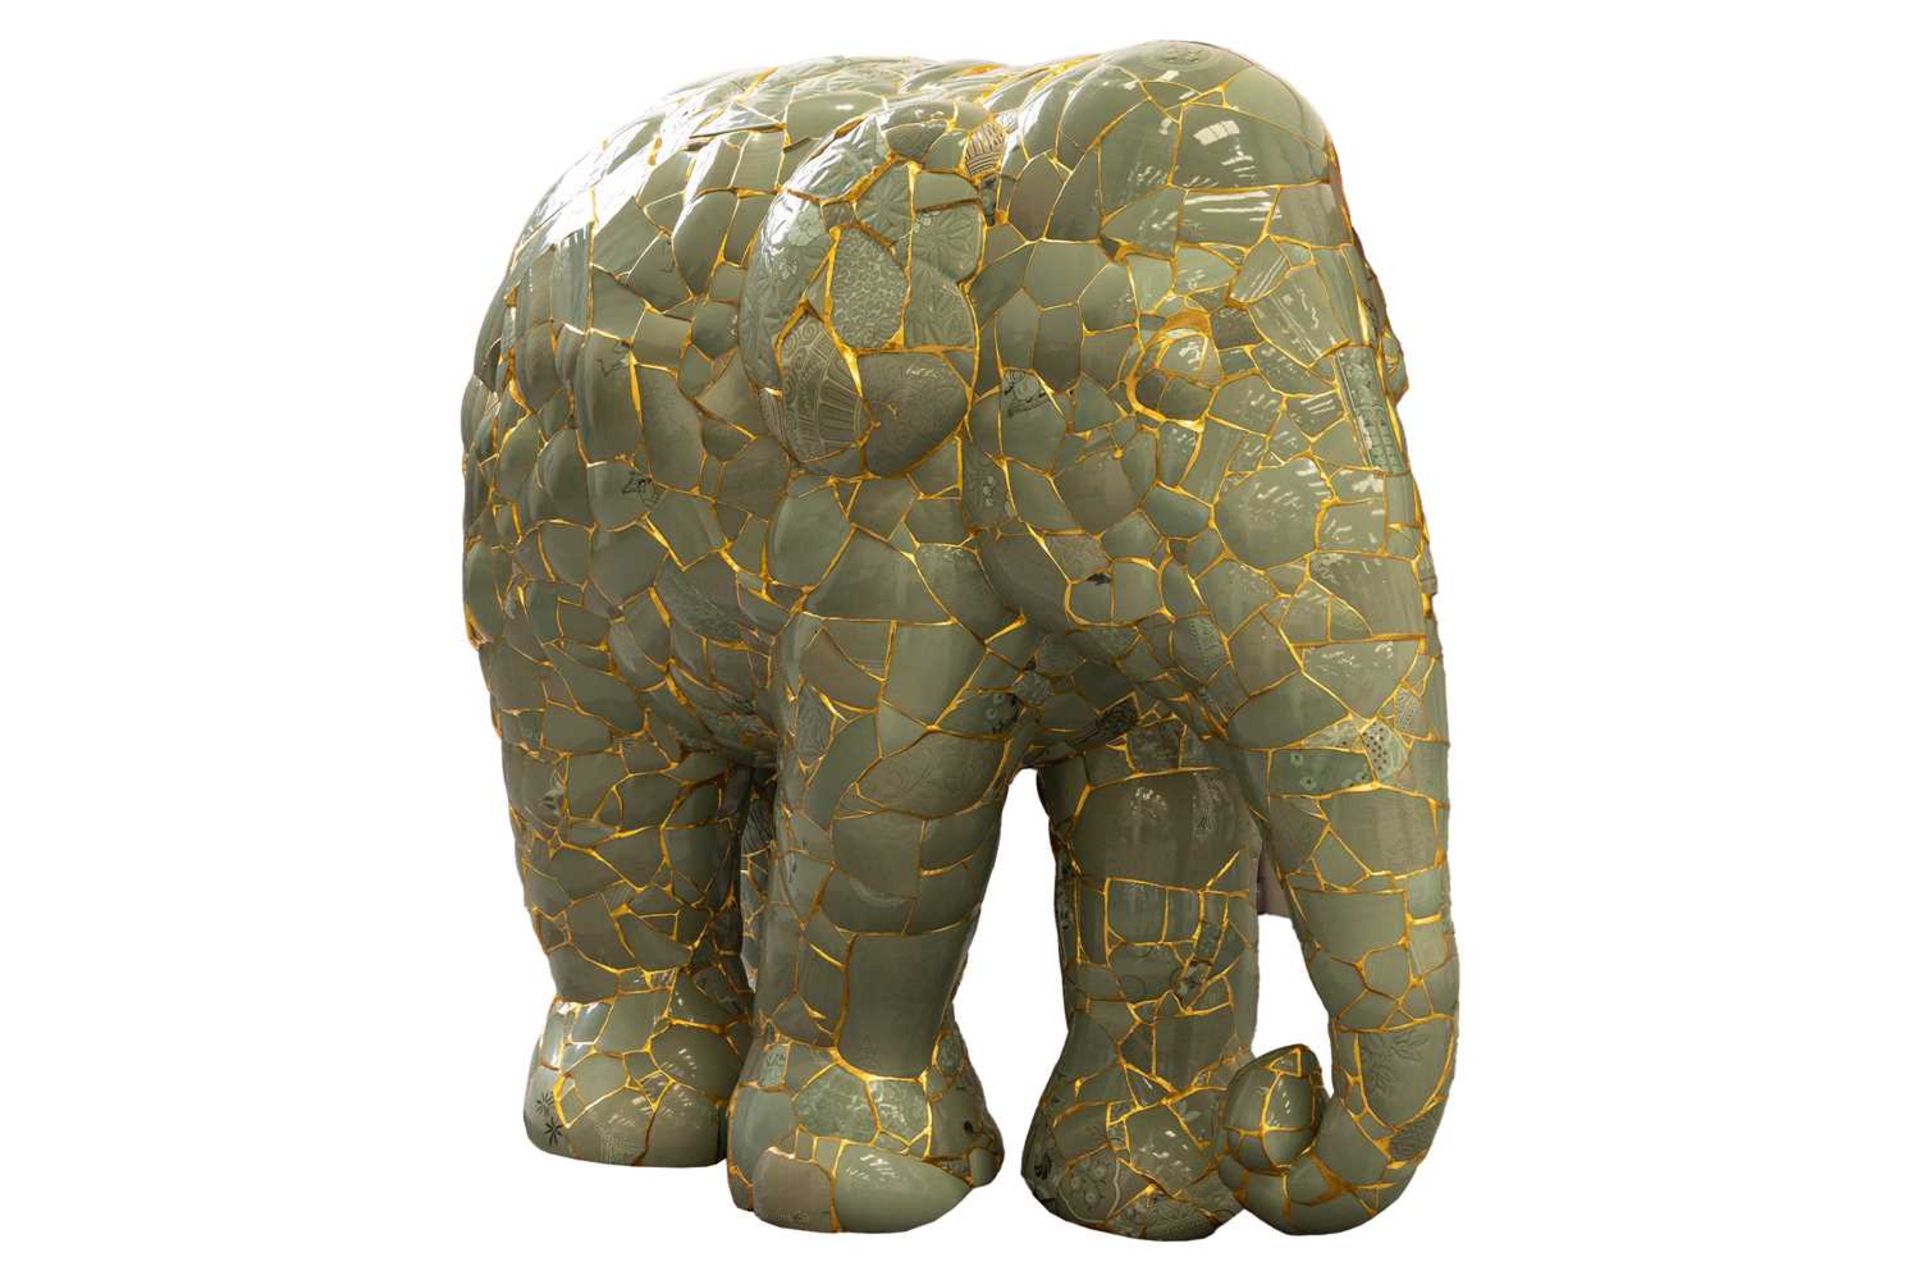 Yeesookyung (b. 1963) South Korean, 'Translated Vase Baby Elephant' (2012), celadon ceramic pieces f - Image 2 of 16